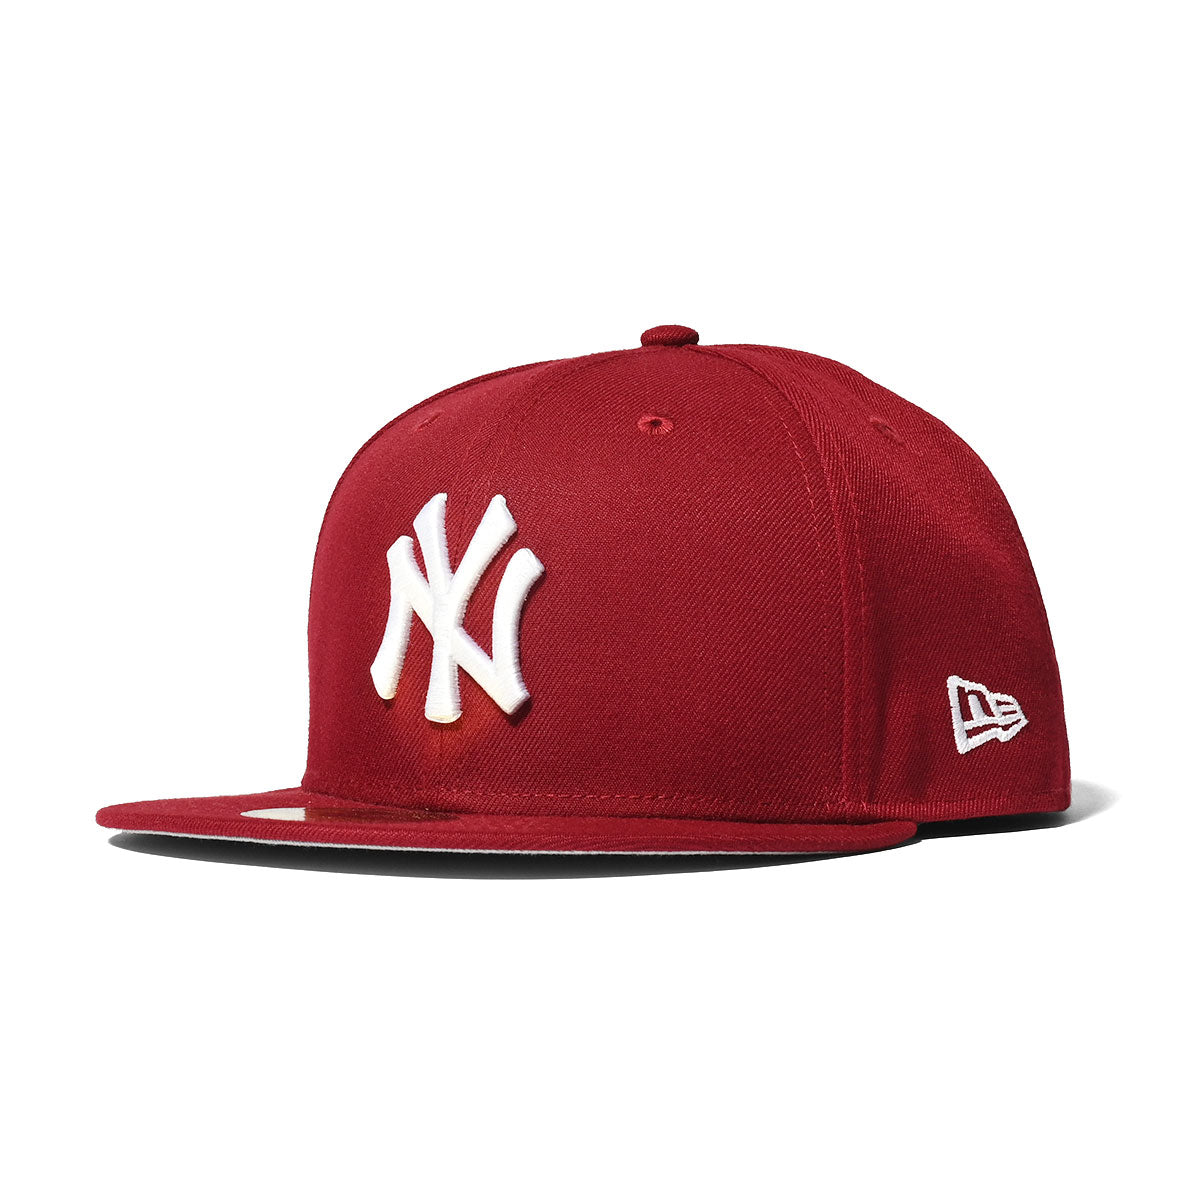 NEW ERA New York Yankees - 59FIFTY BURGUNDY